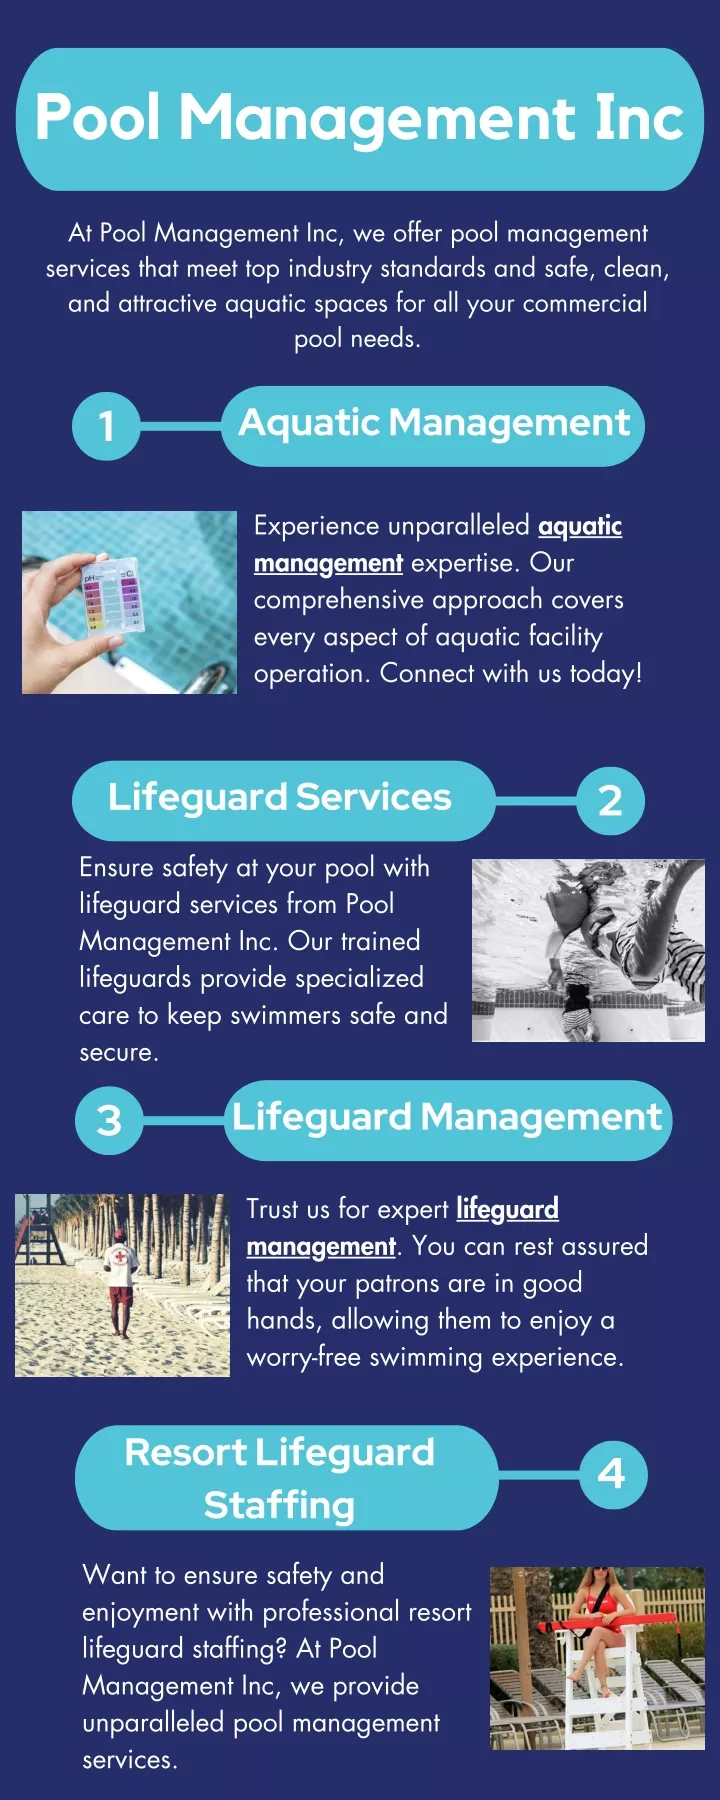 pool management inc